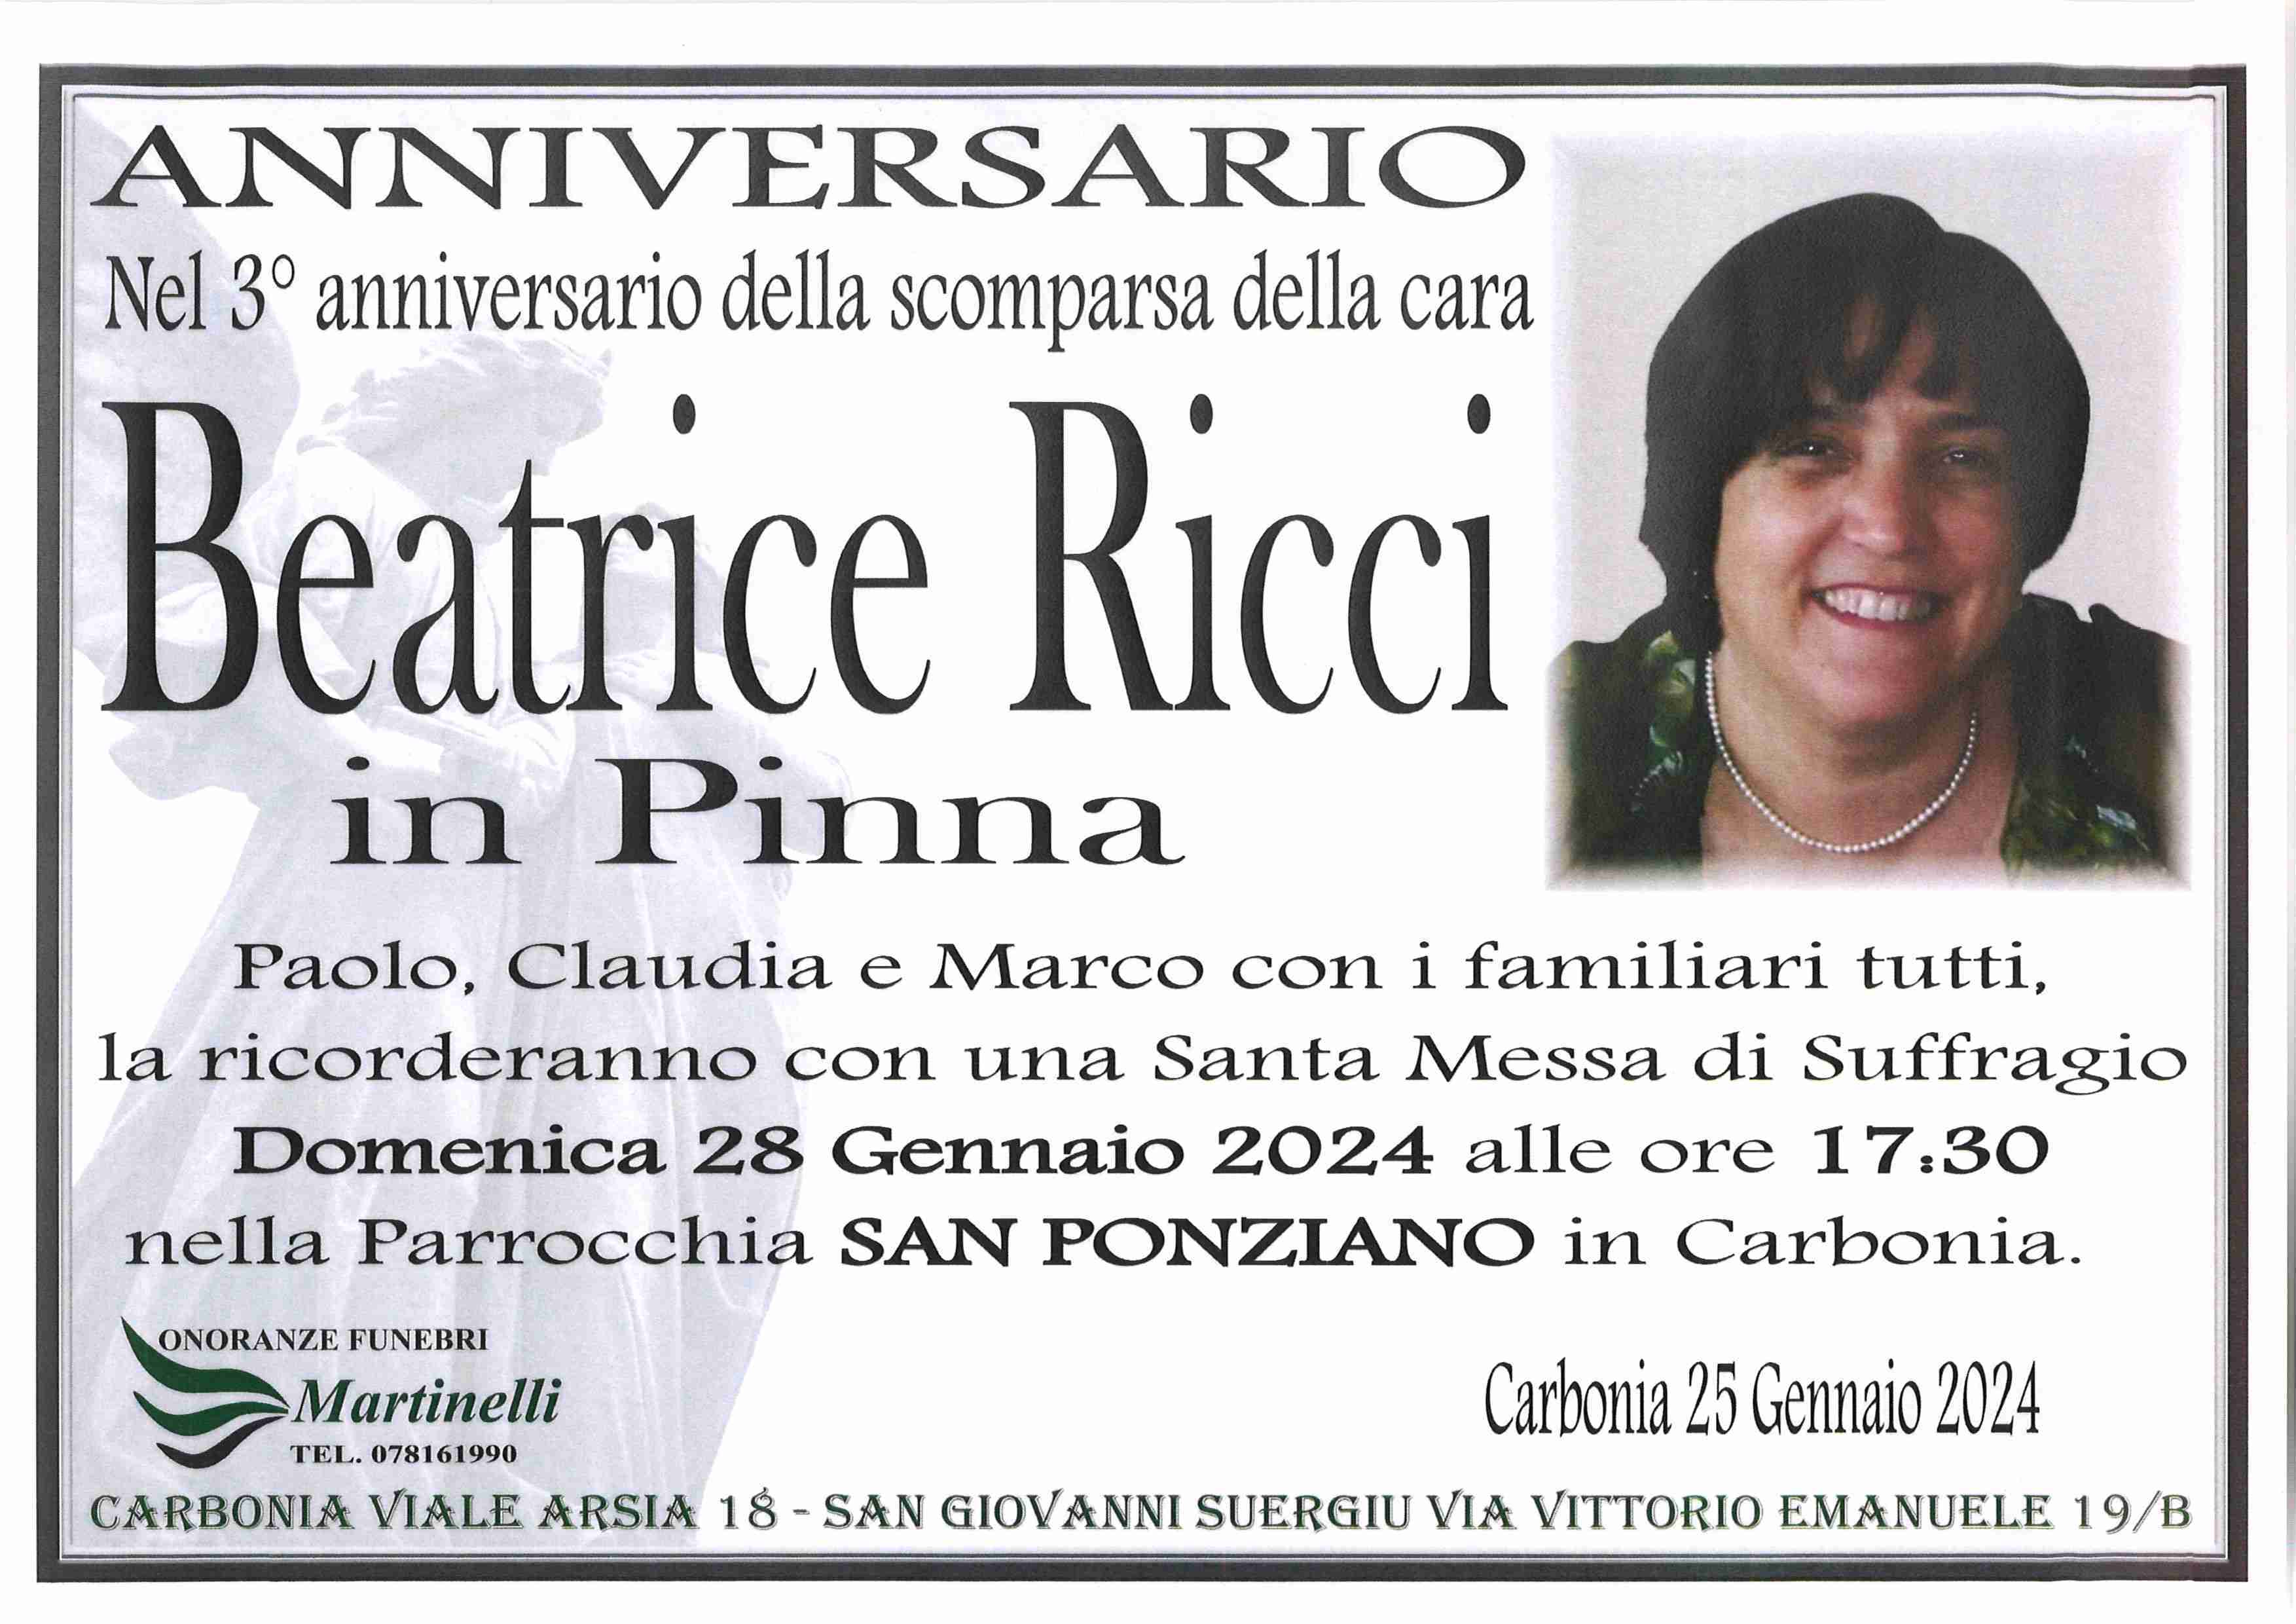 Beatrice Ricci